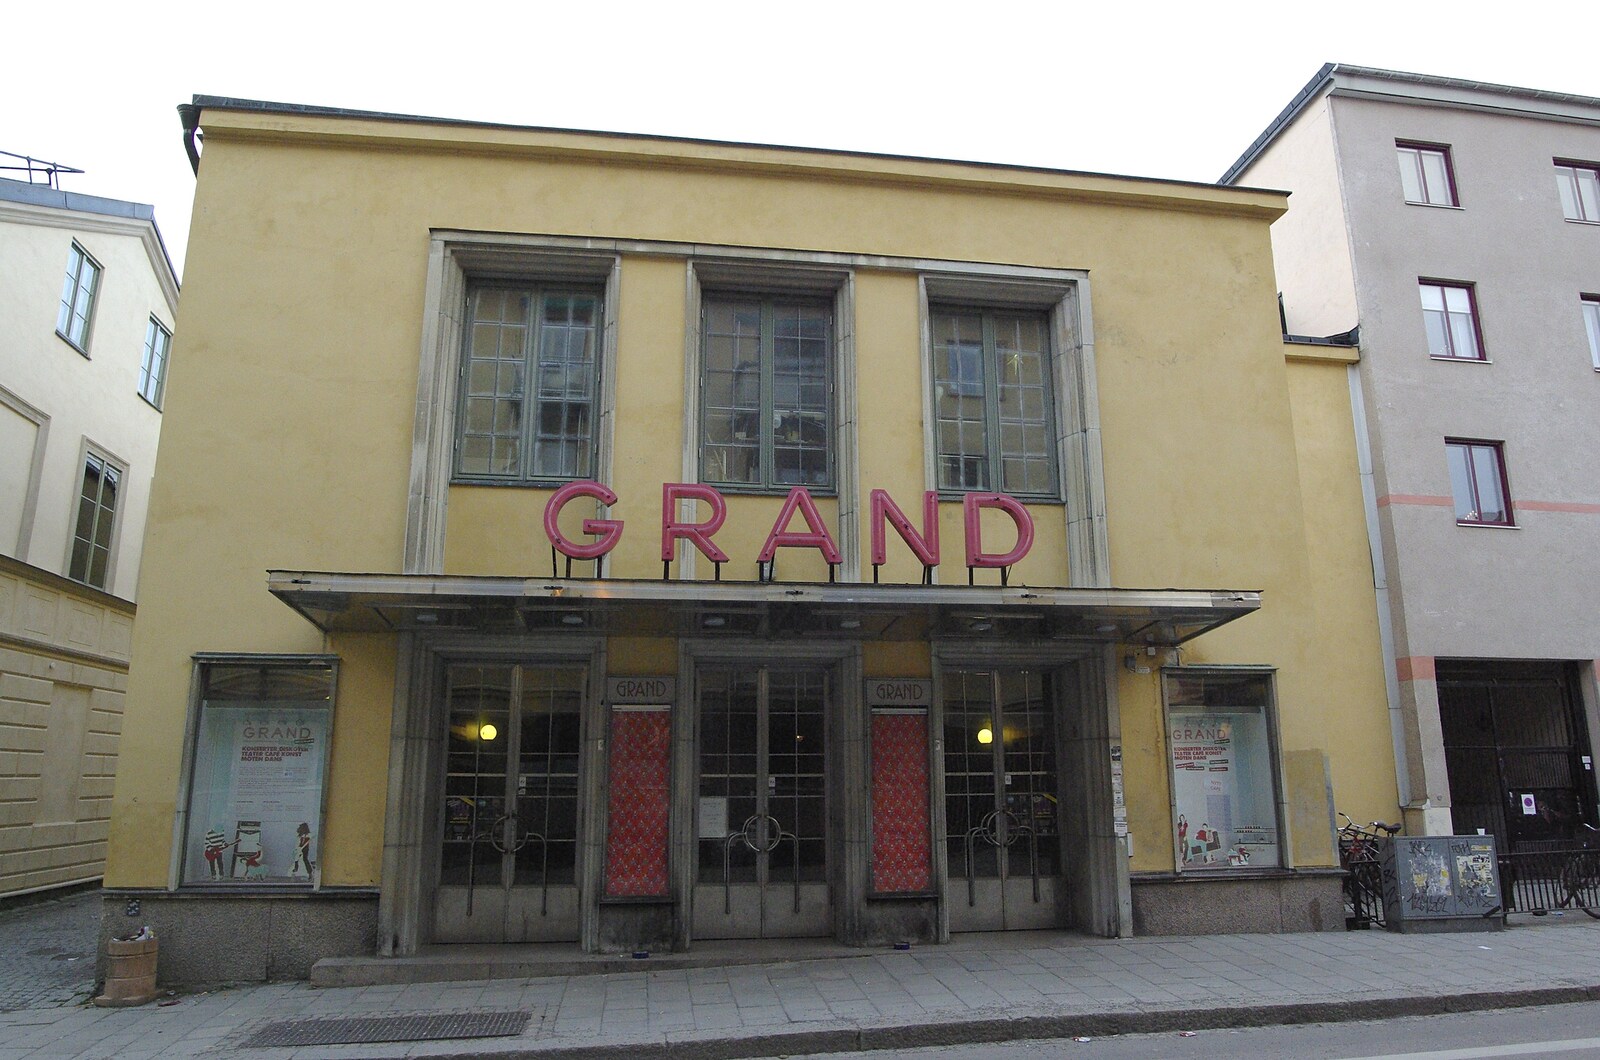 The old Grand Cinema, Uppsala from Gamla Uppsala, Uppsala County, Sweden - 16th December 2007